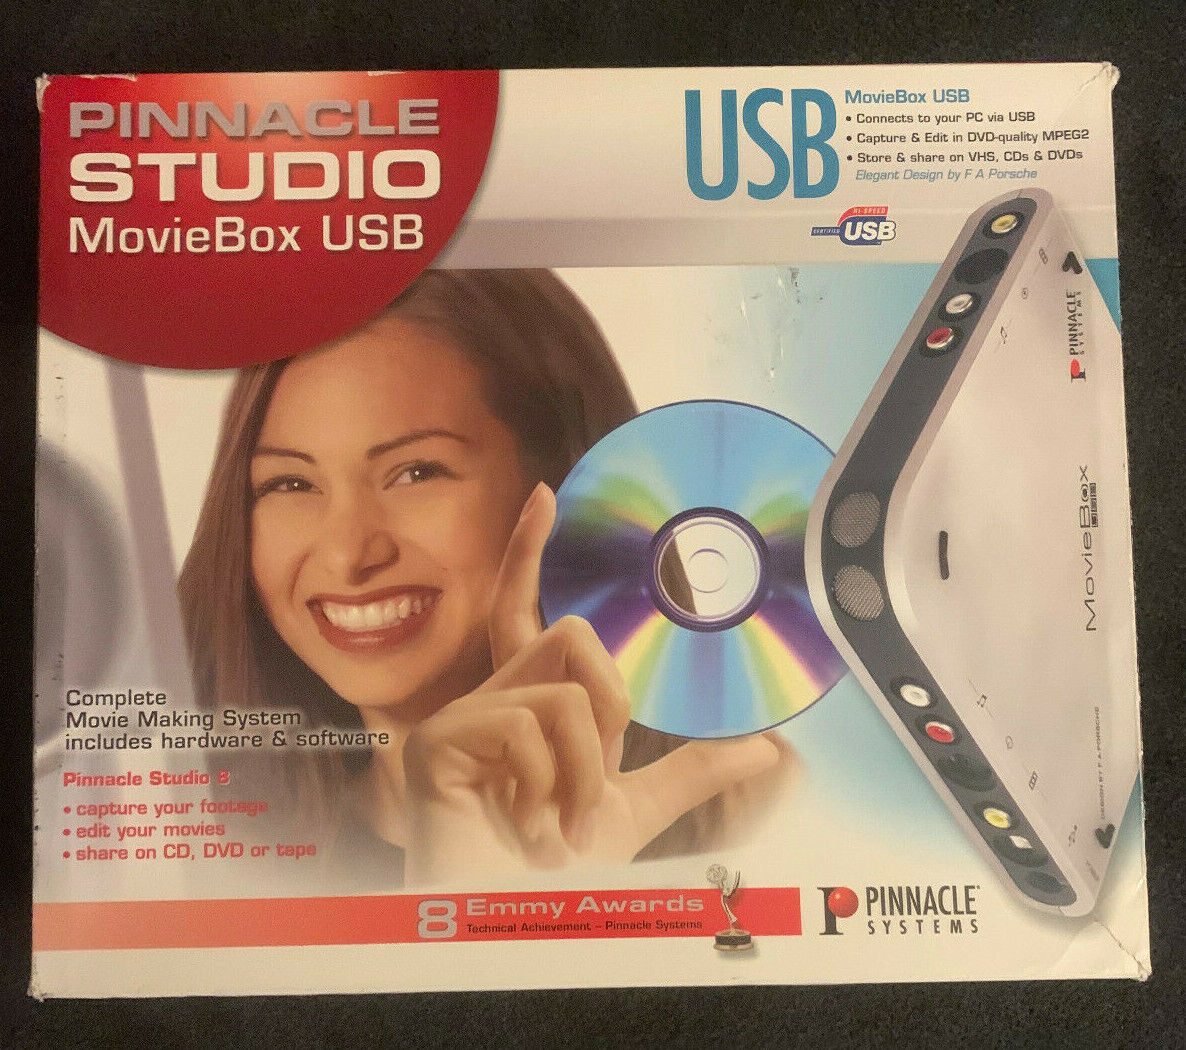 Pinnacle Studio 8 MovieBox USB Video Capture Device w/Editing Software in Box